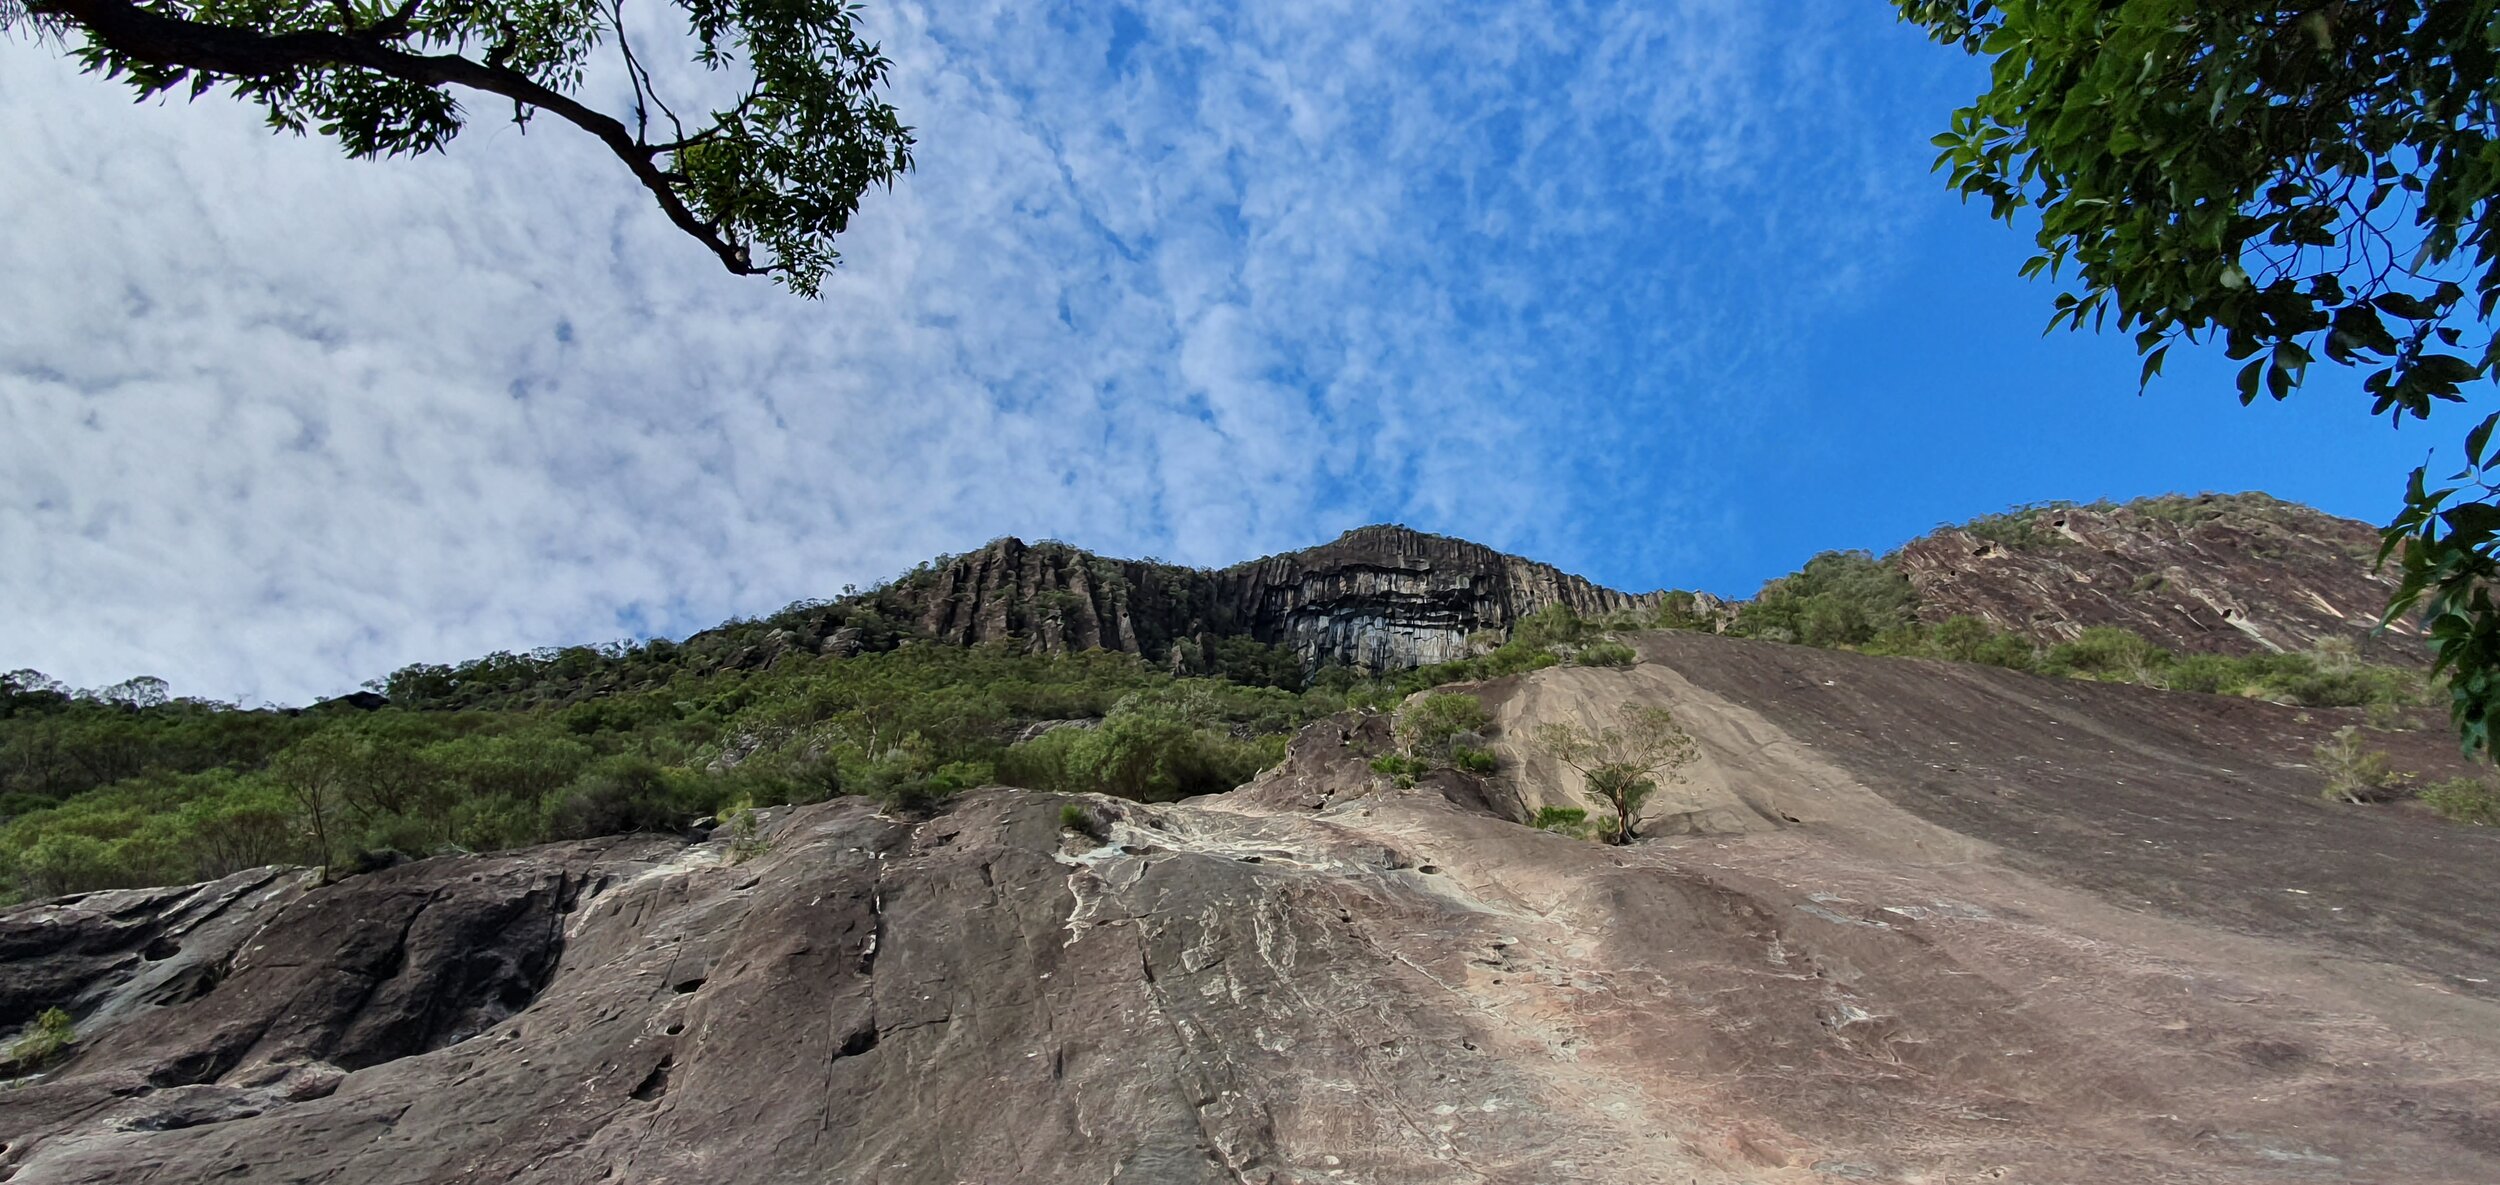 Tibrogargan Rock Face